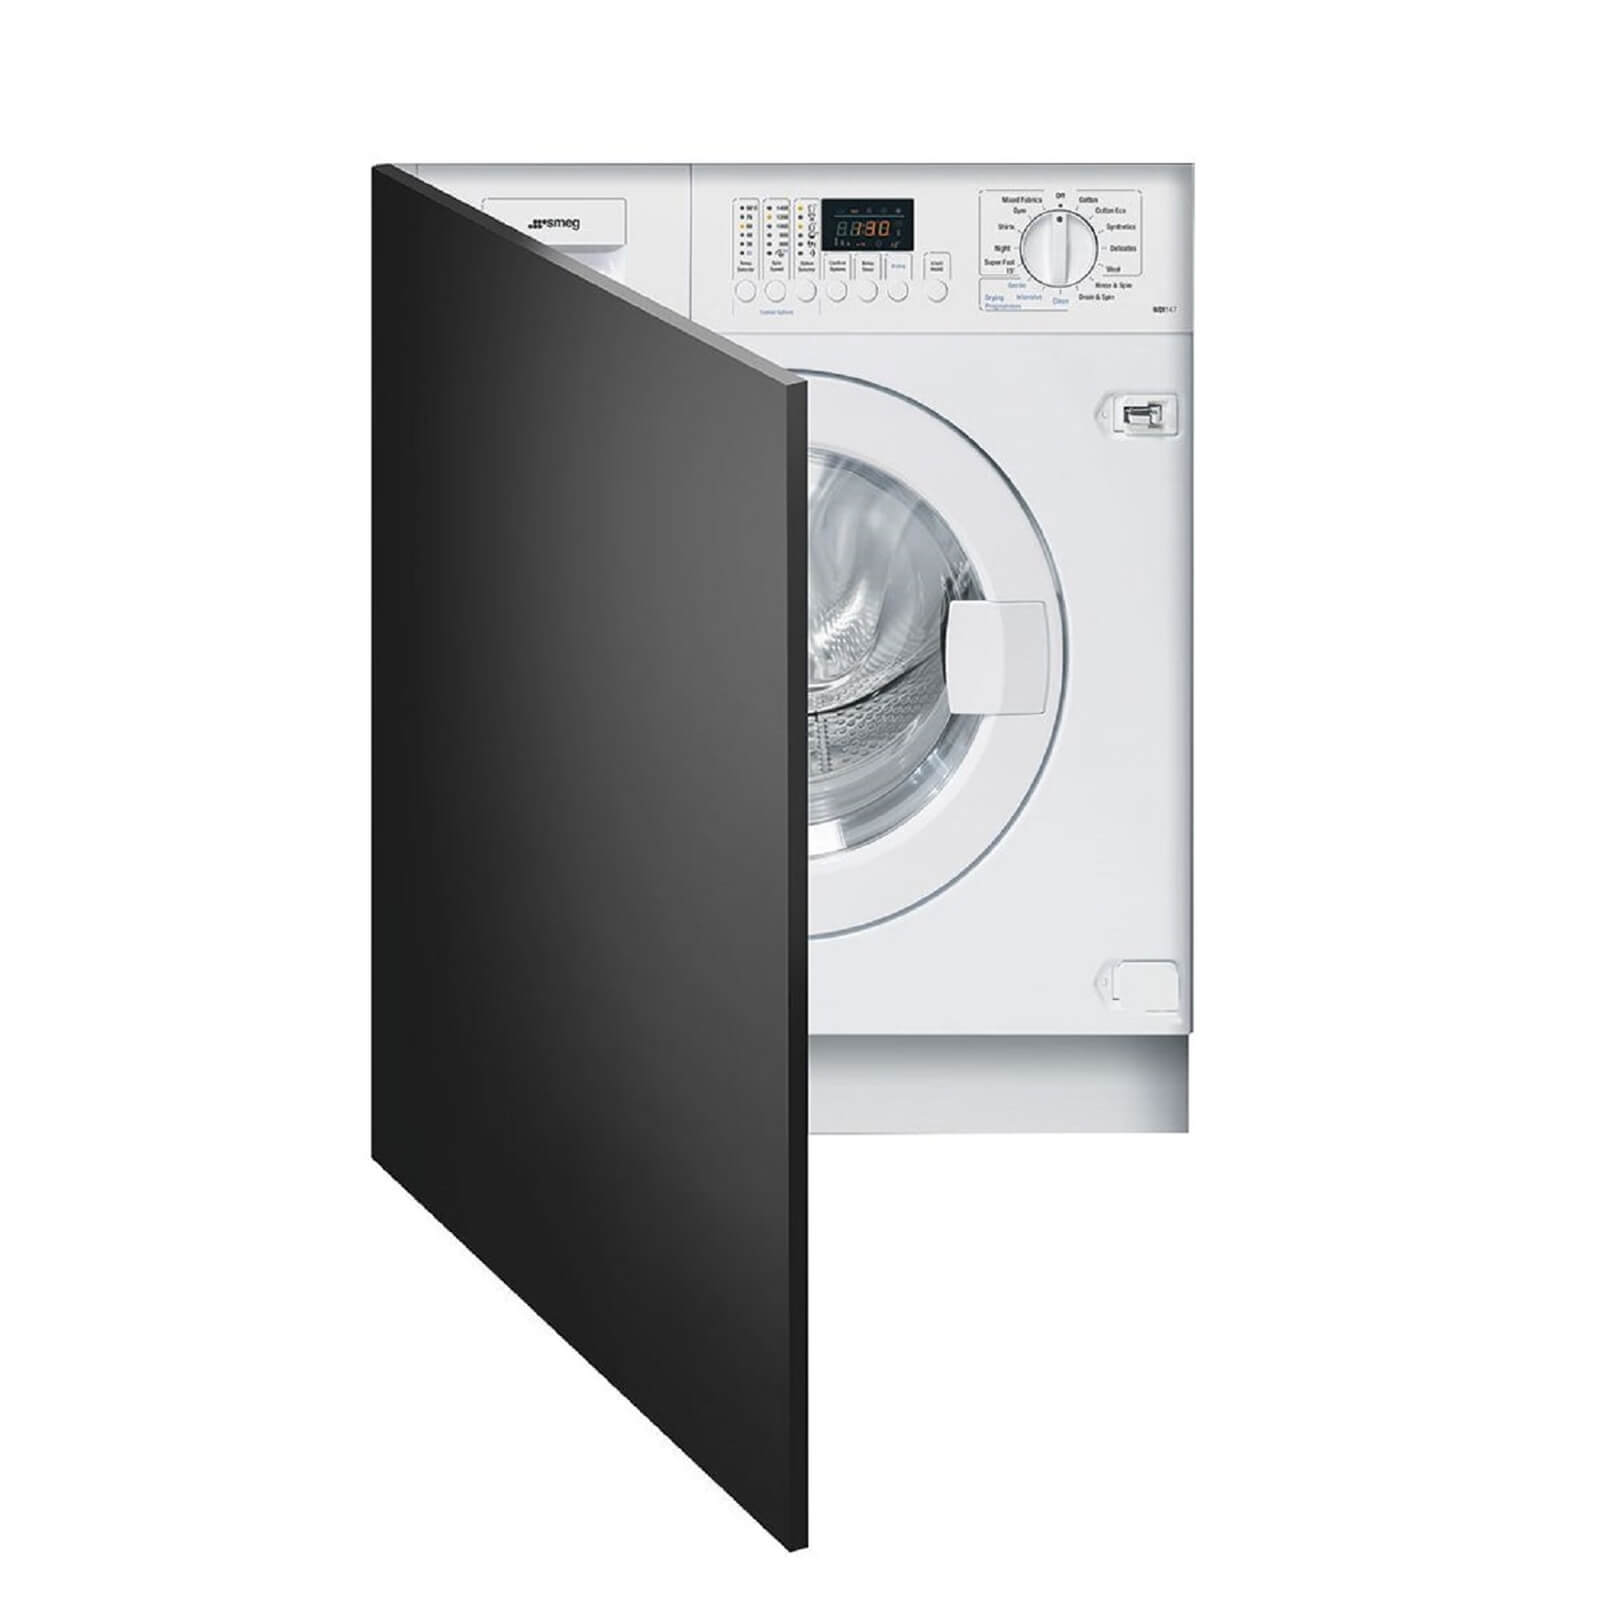 Smeg WDI147 Integrated Washer Dryer - 7kg